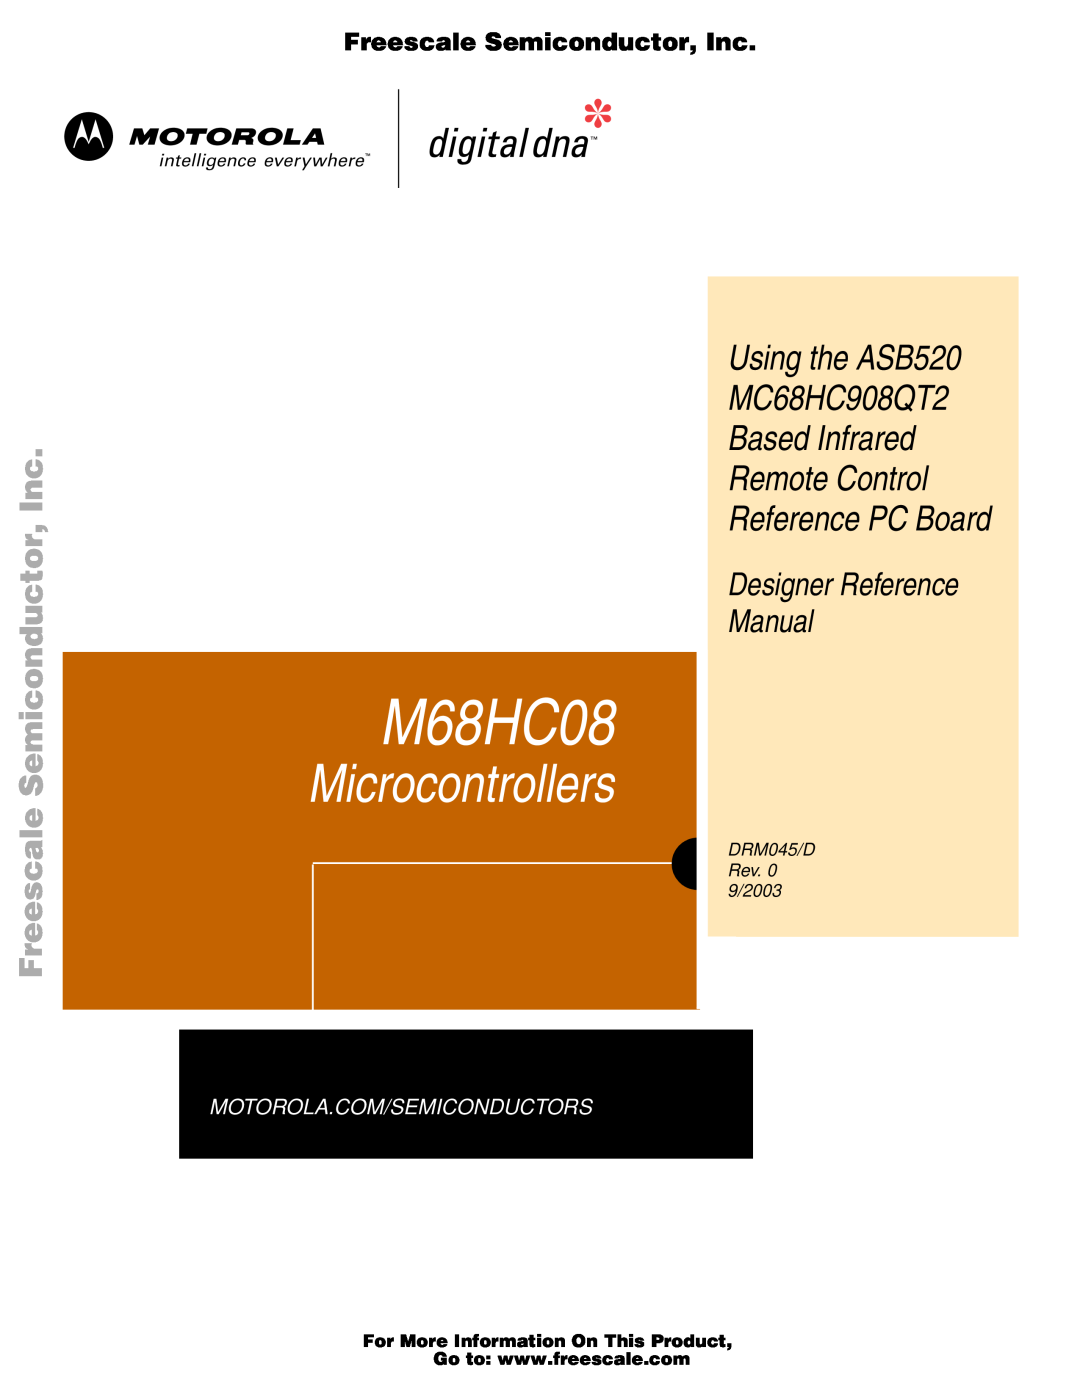 Freescale Semiconductor MC68HC908QT2 manual Freescale Semiconductor, Inc, M68HC08, Microcontrollers 